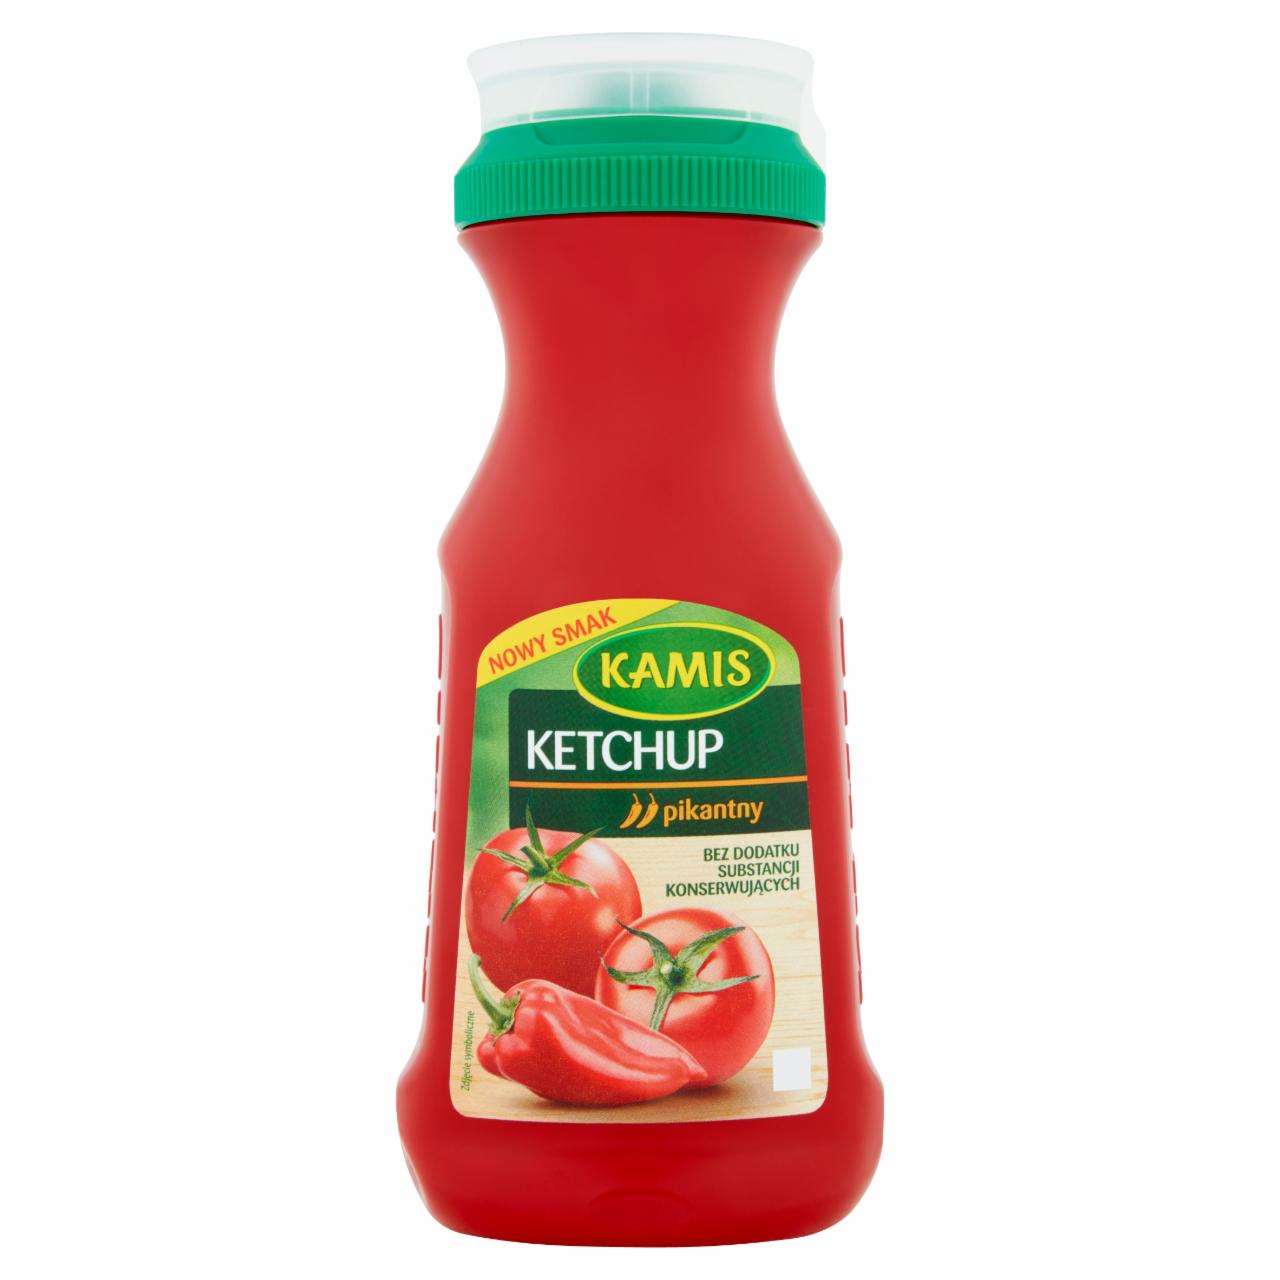 Zdjęcia - Kamis Ketchup pikantny 350 g